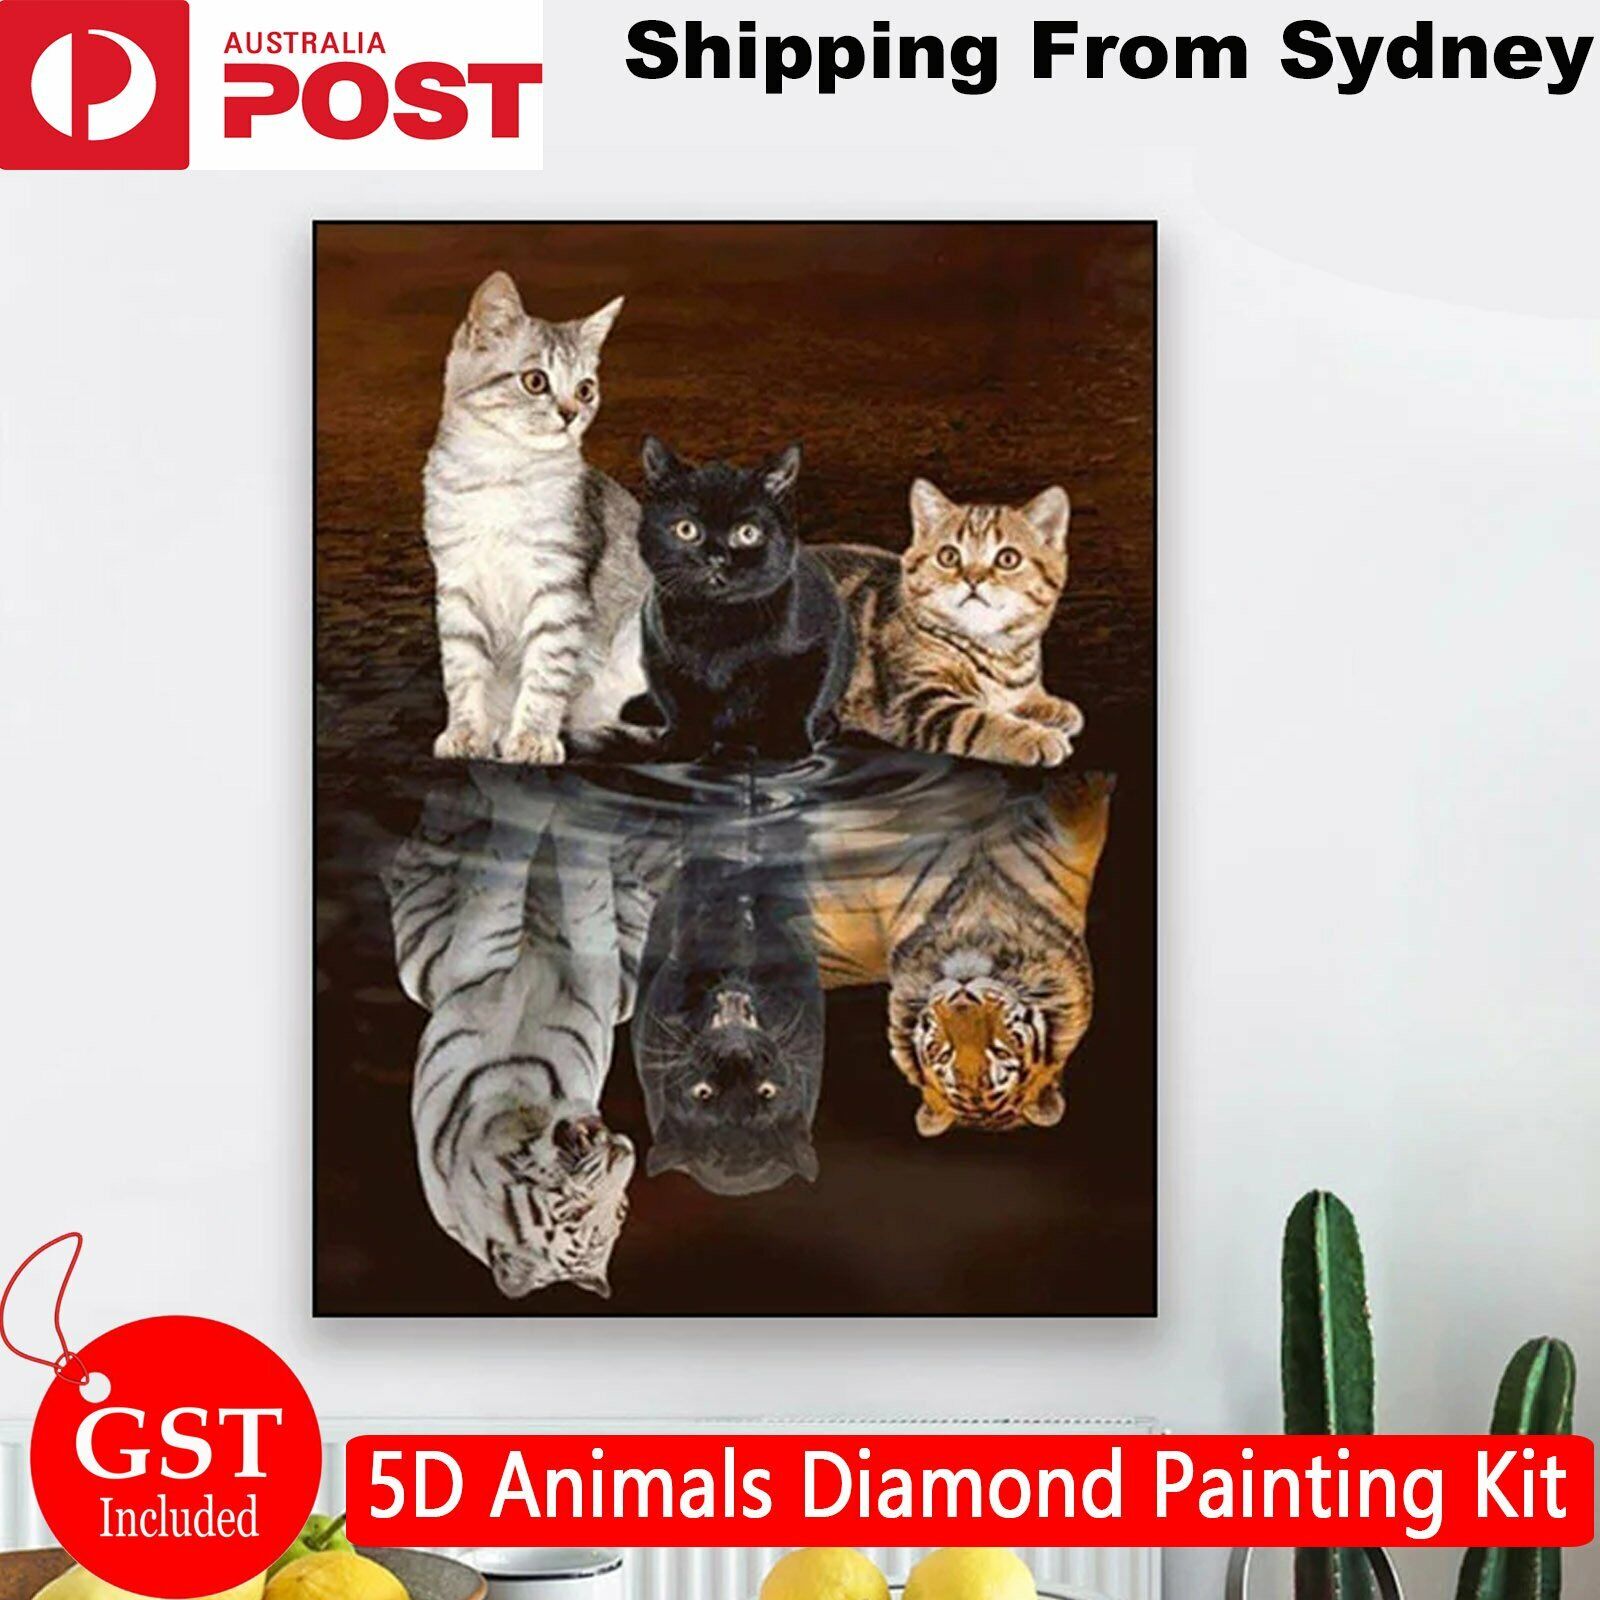 5D Animals Diamond Painting Kits Full Drill Art Embroidery Decors Cats  Gifts DIY | eBay